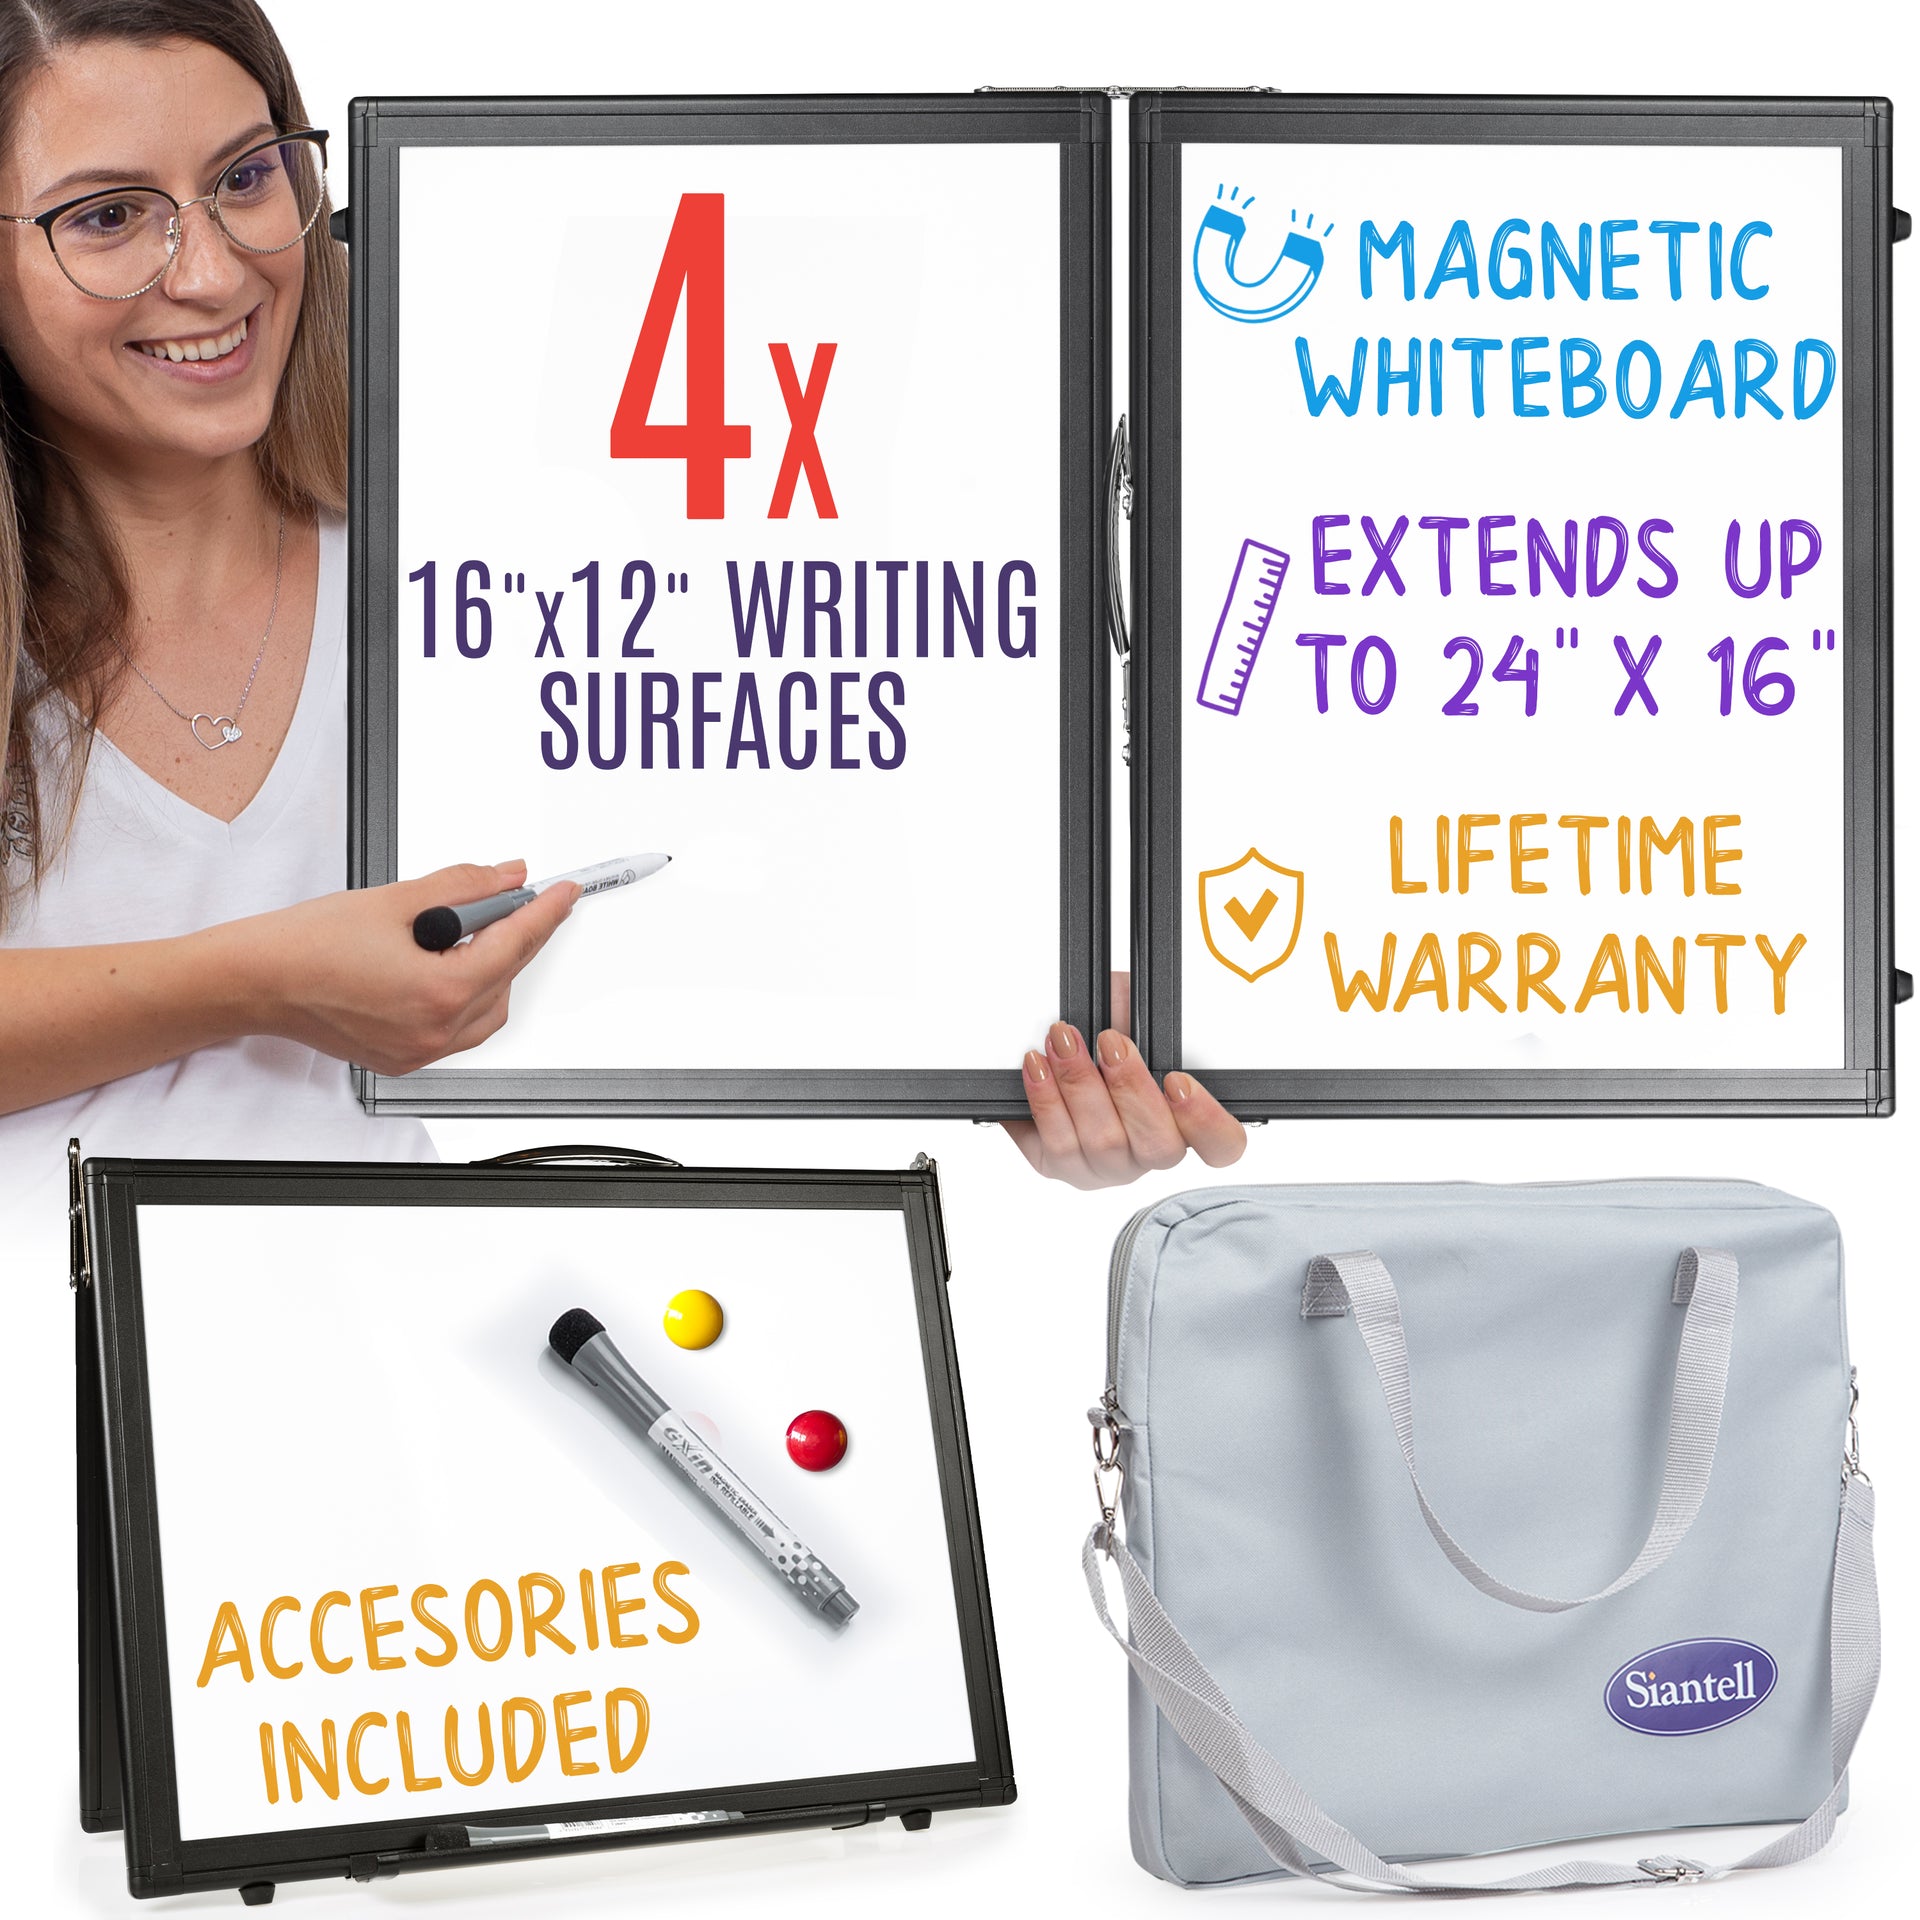 Desktop Dry Erase Magnetic Whiteboard - 16 x 12 Double Sided